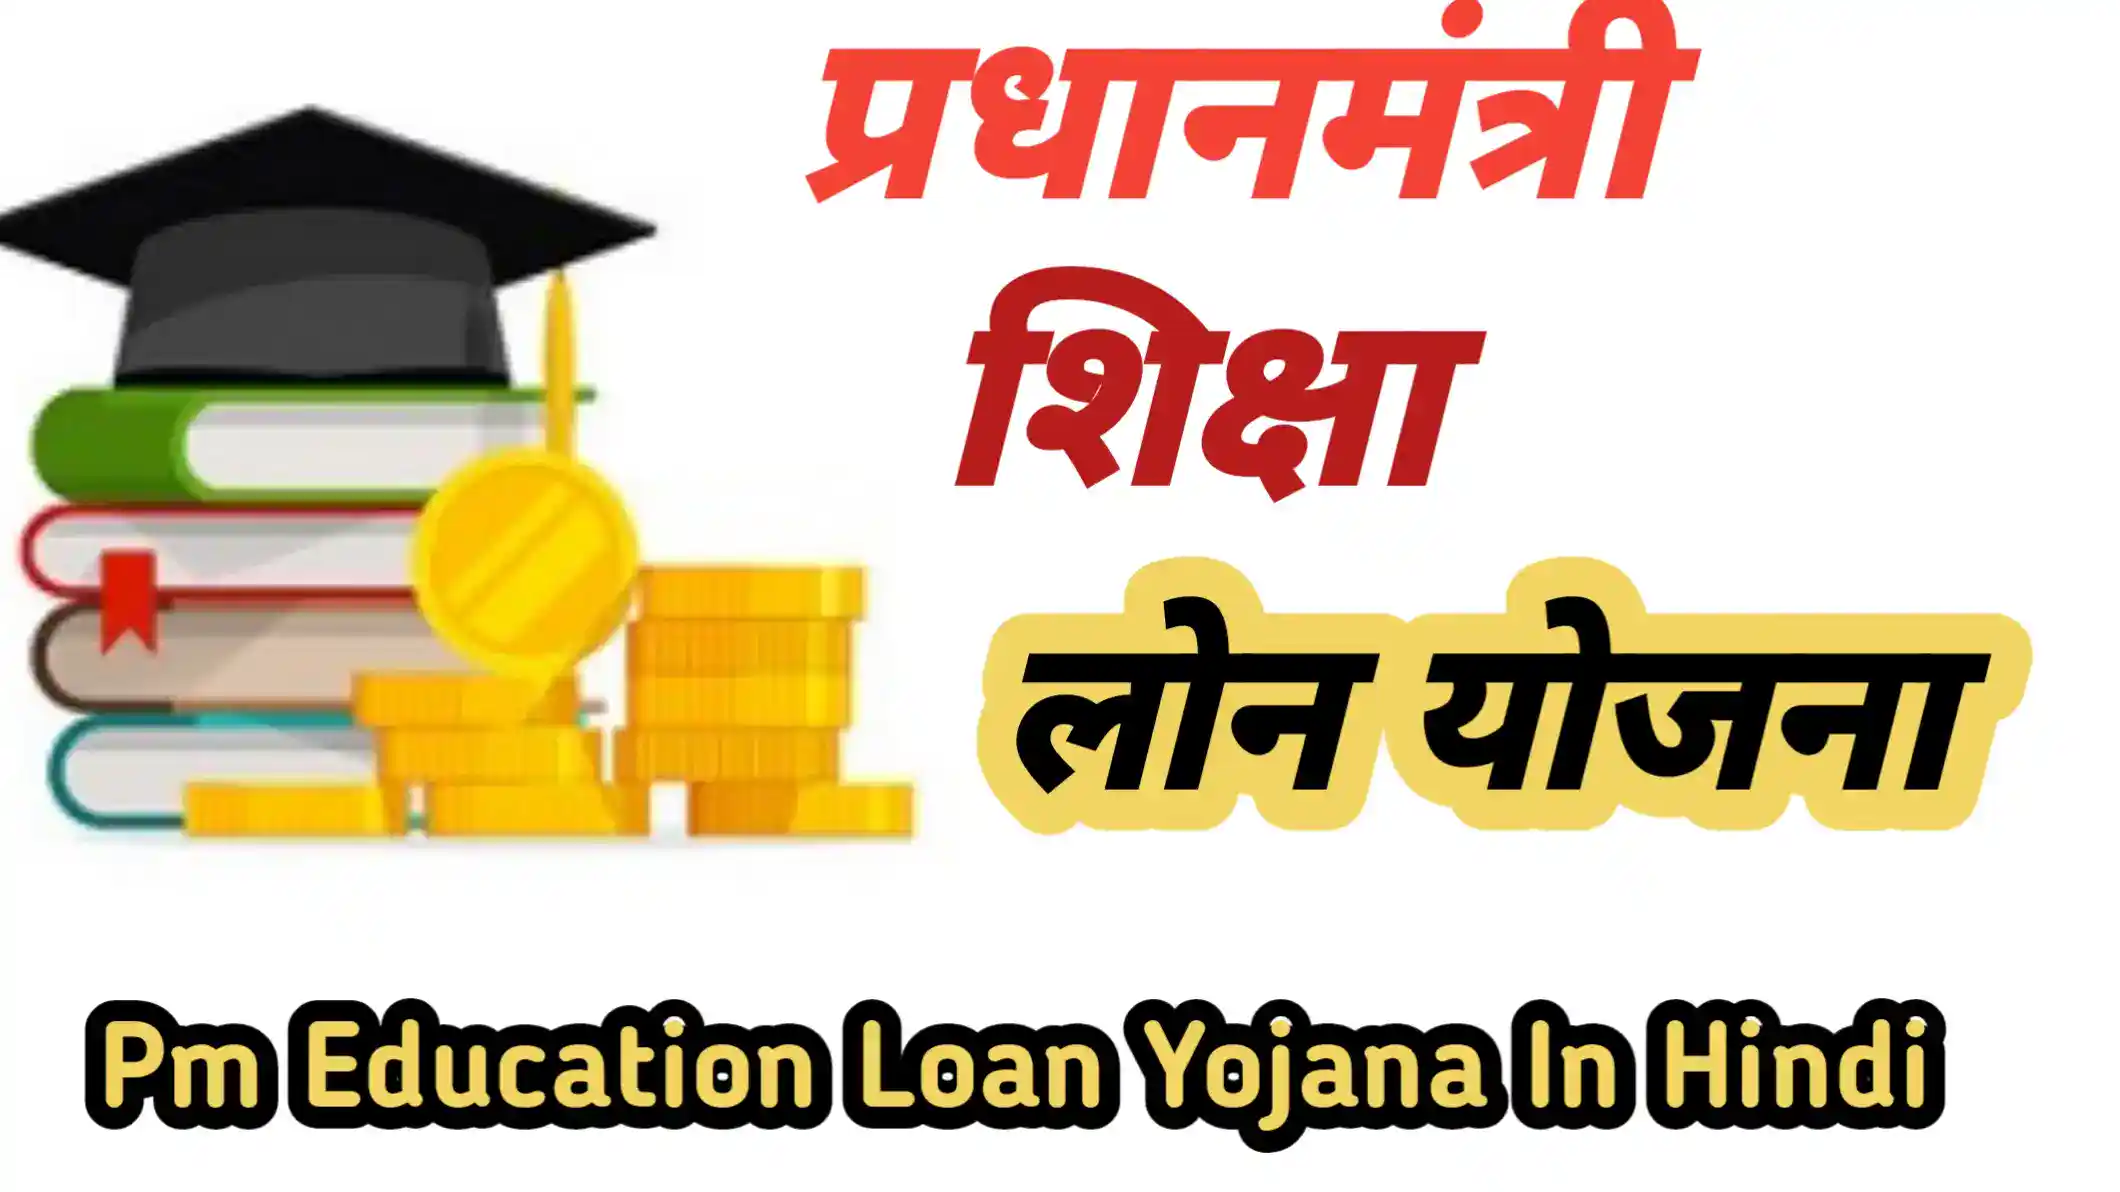 Pm Education Loan Yojana